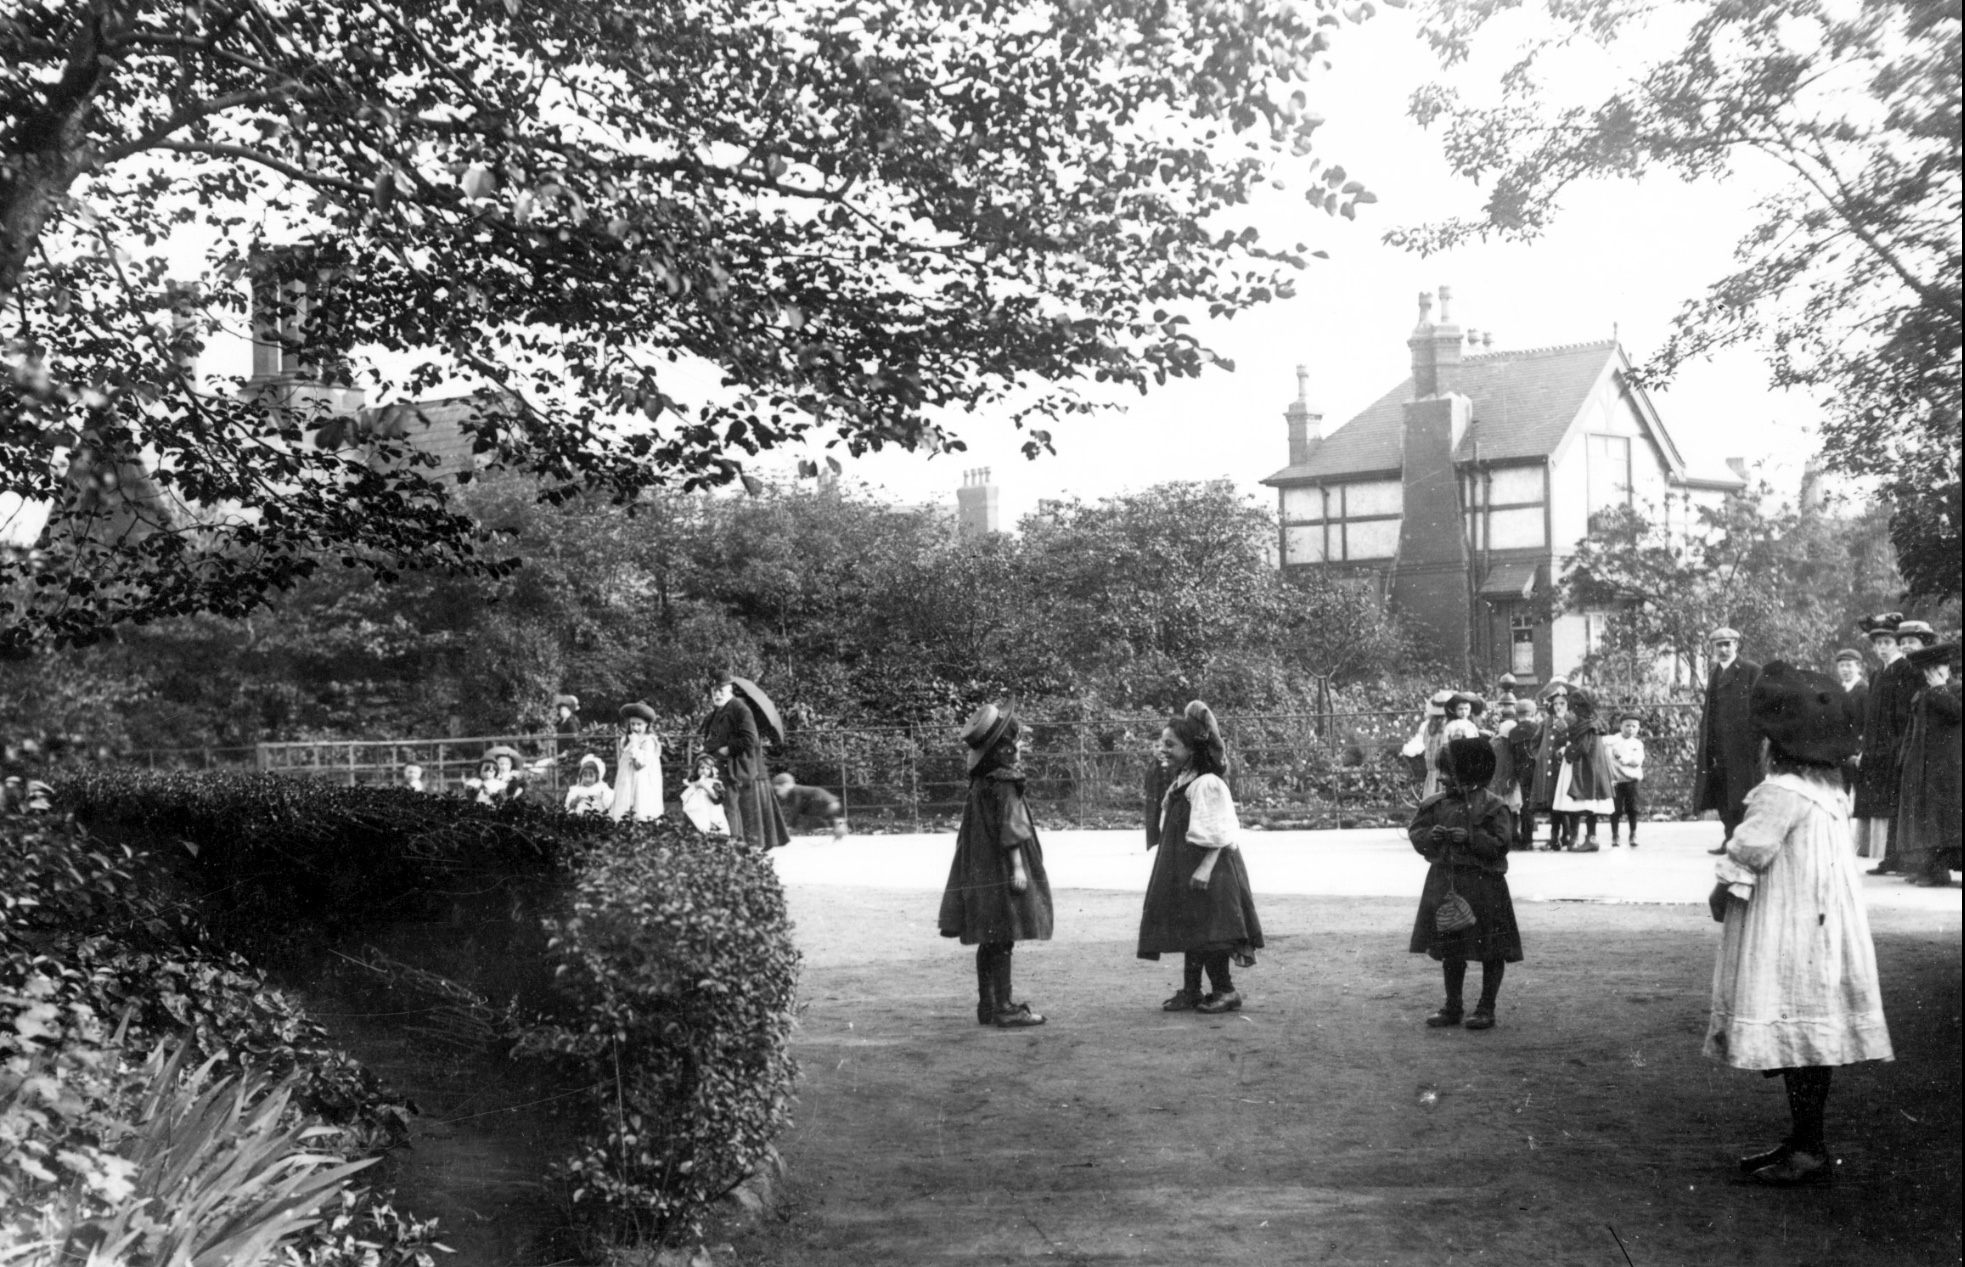 Children’s Play Area, Woodhouse Moor, circa 1905